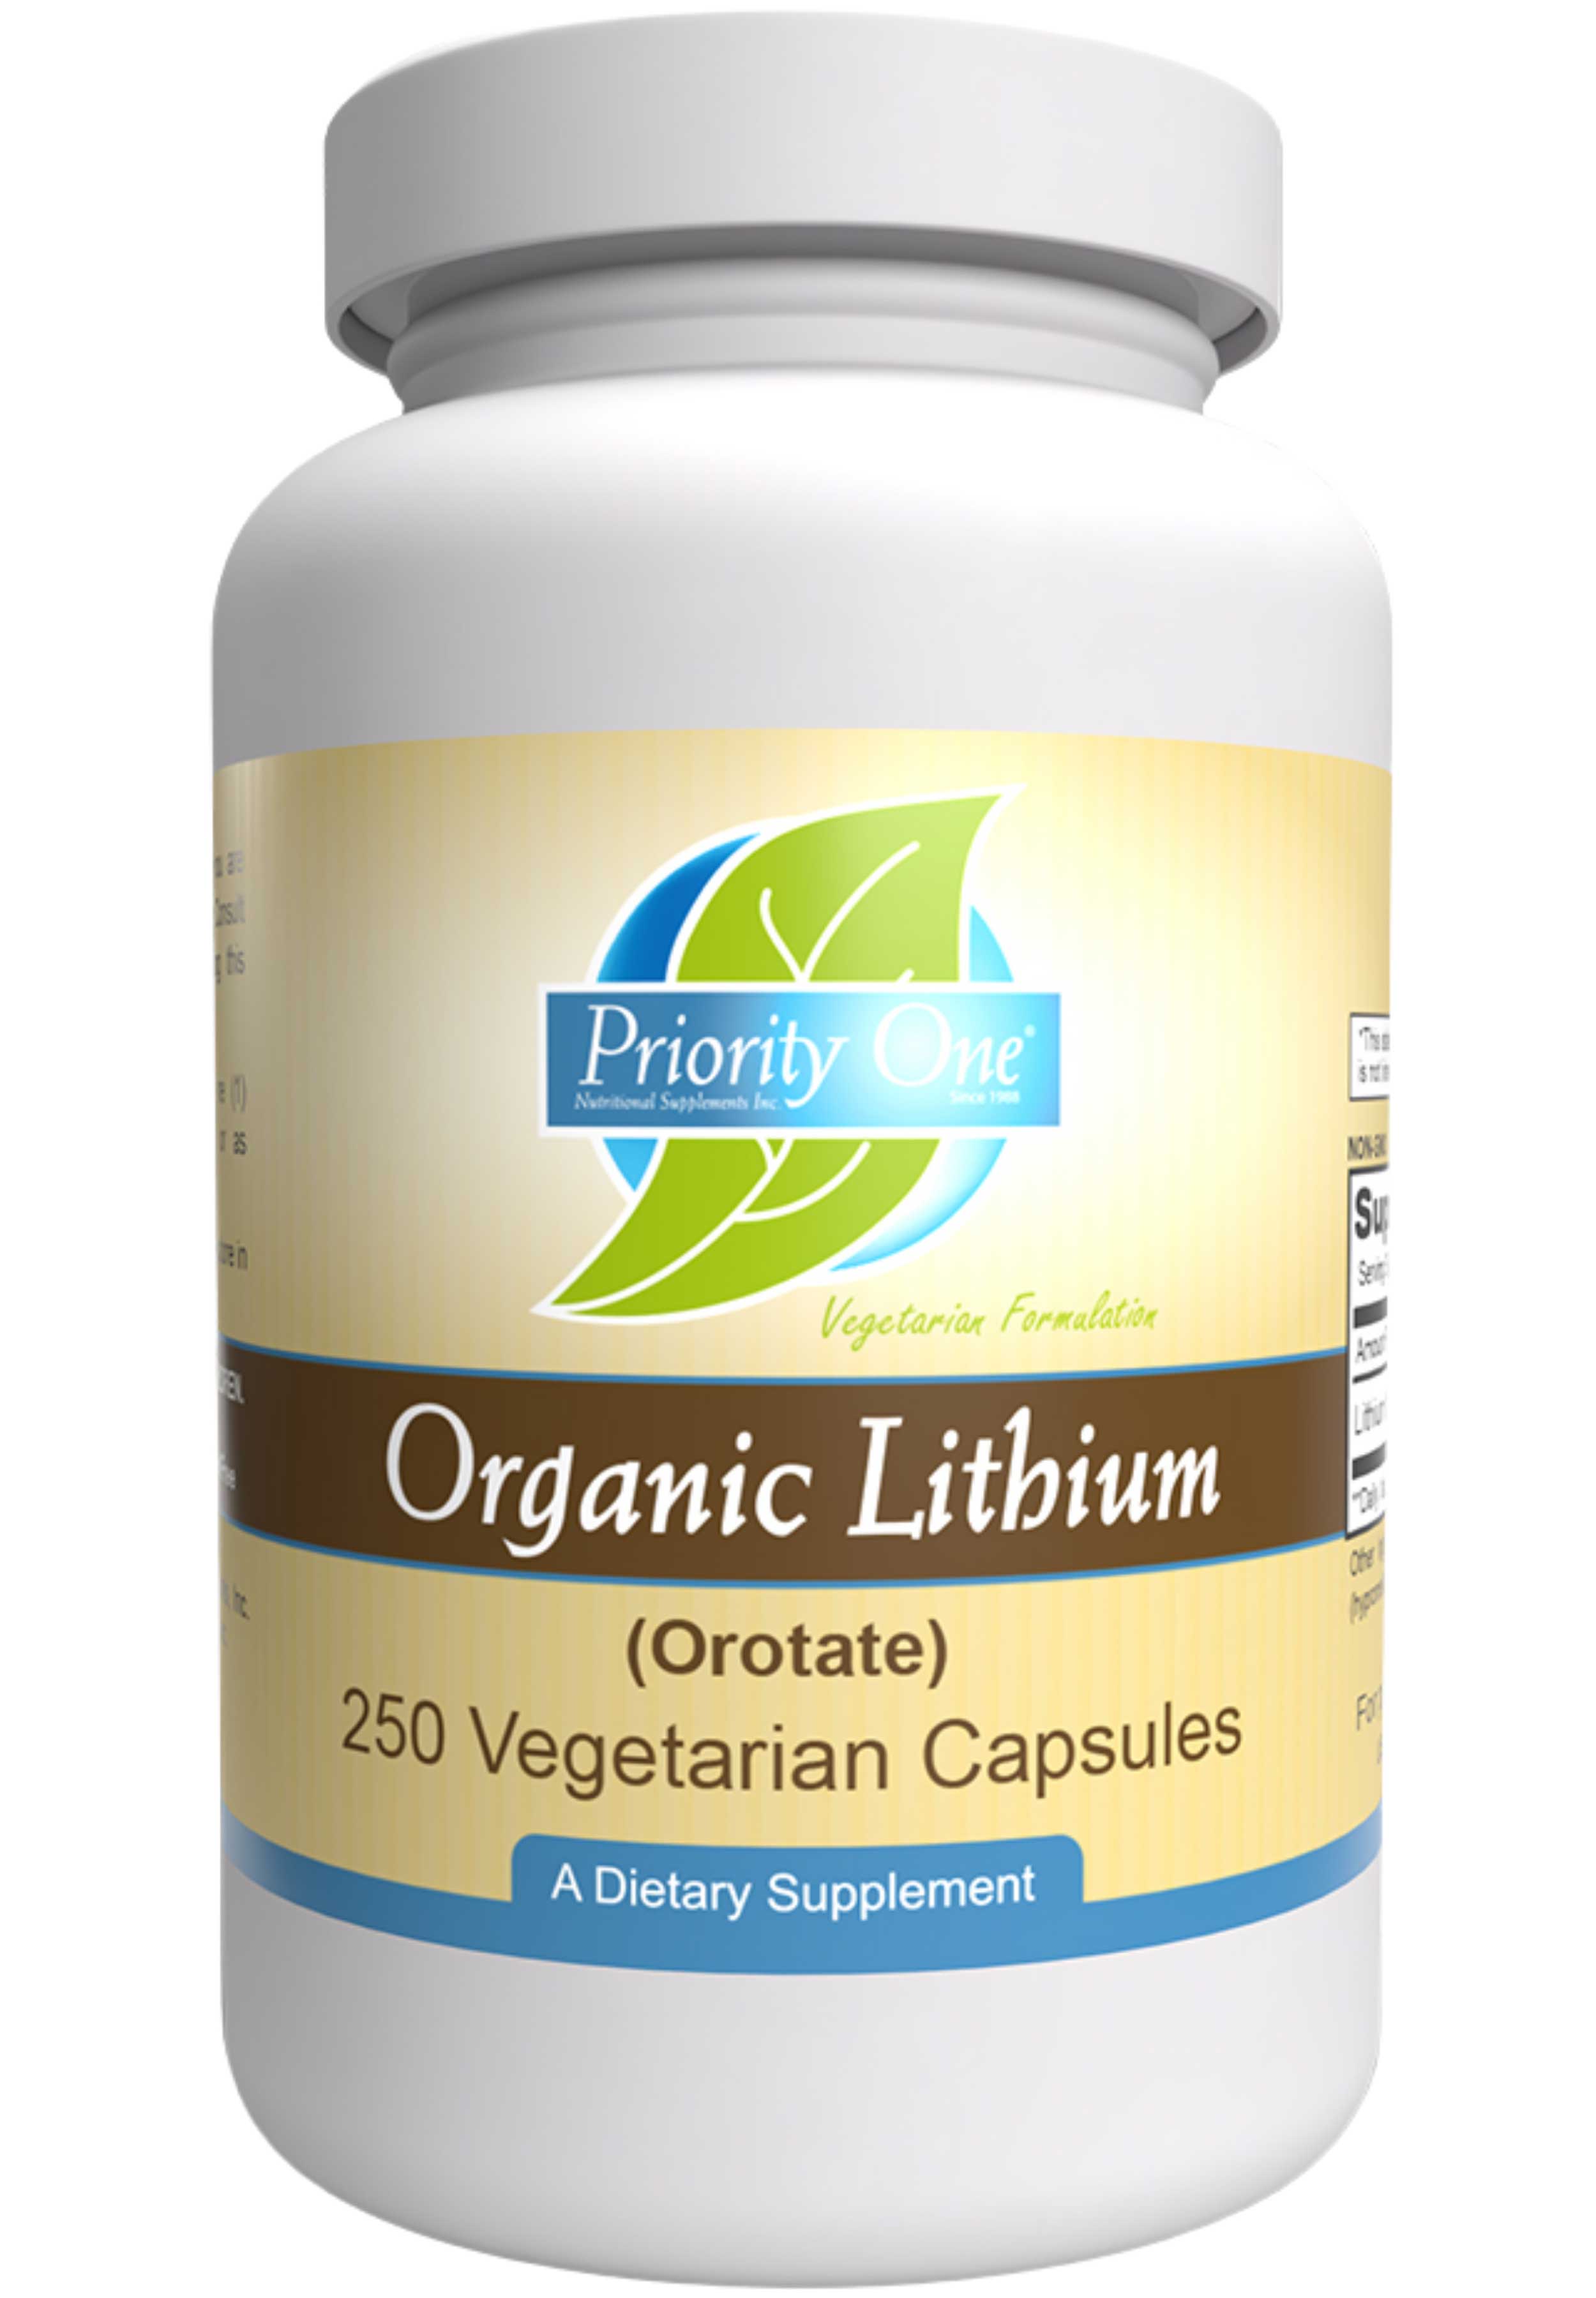 Priority One Organic Lithium 5 mg